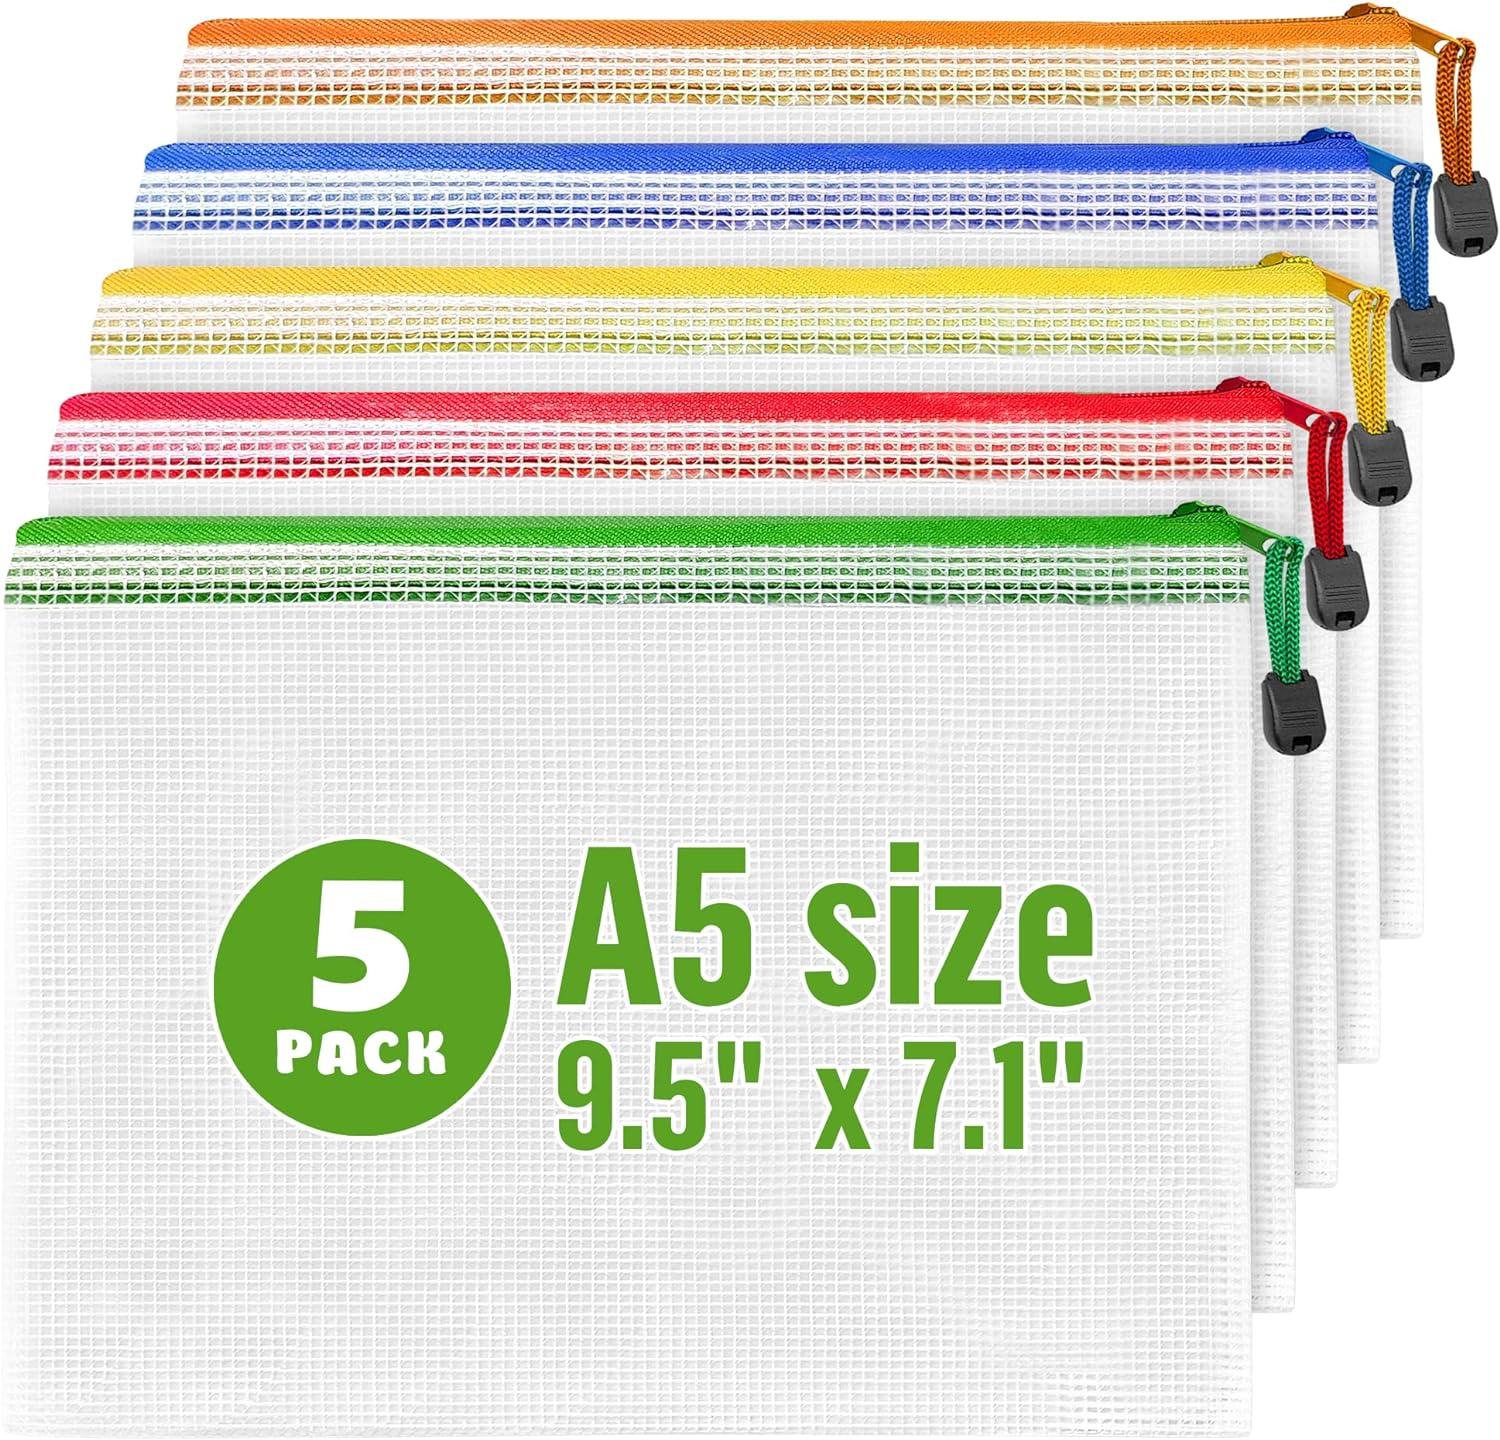 Mesh Zipper Pouch Bags A5-5 Pack Plastic Zipper Pouches For Organizing 9 5x7 1 - Mesh Pouch With Zipper Bags For Organizing - Mesh Zipper Bags